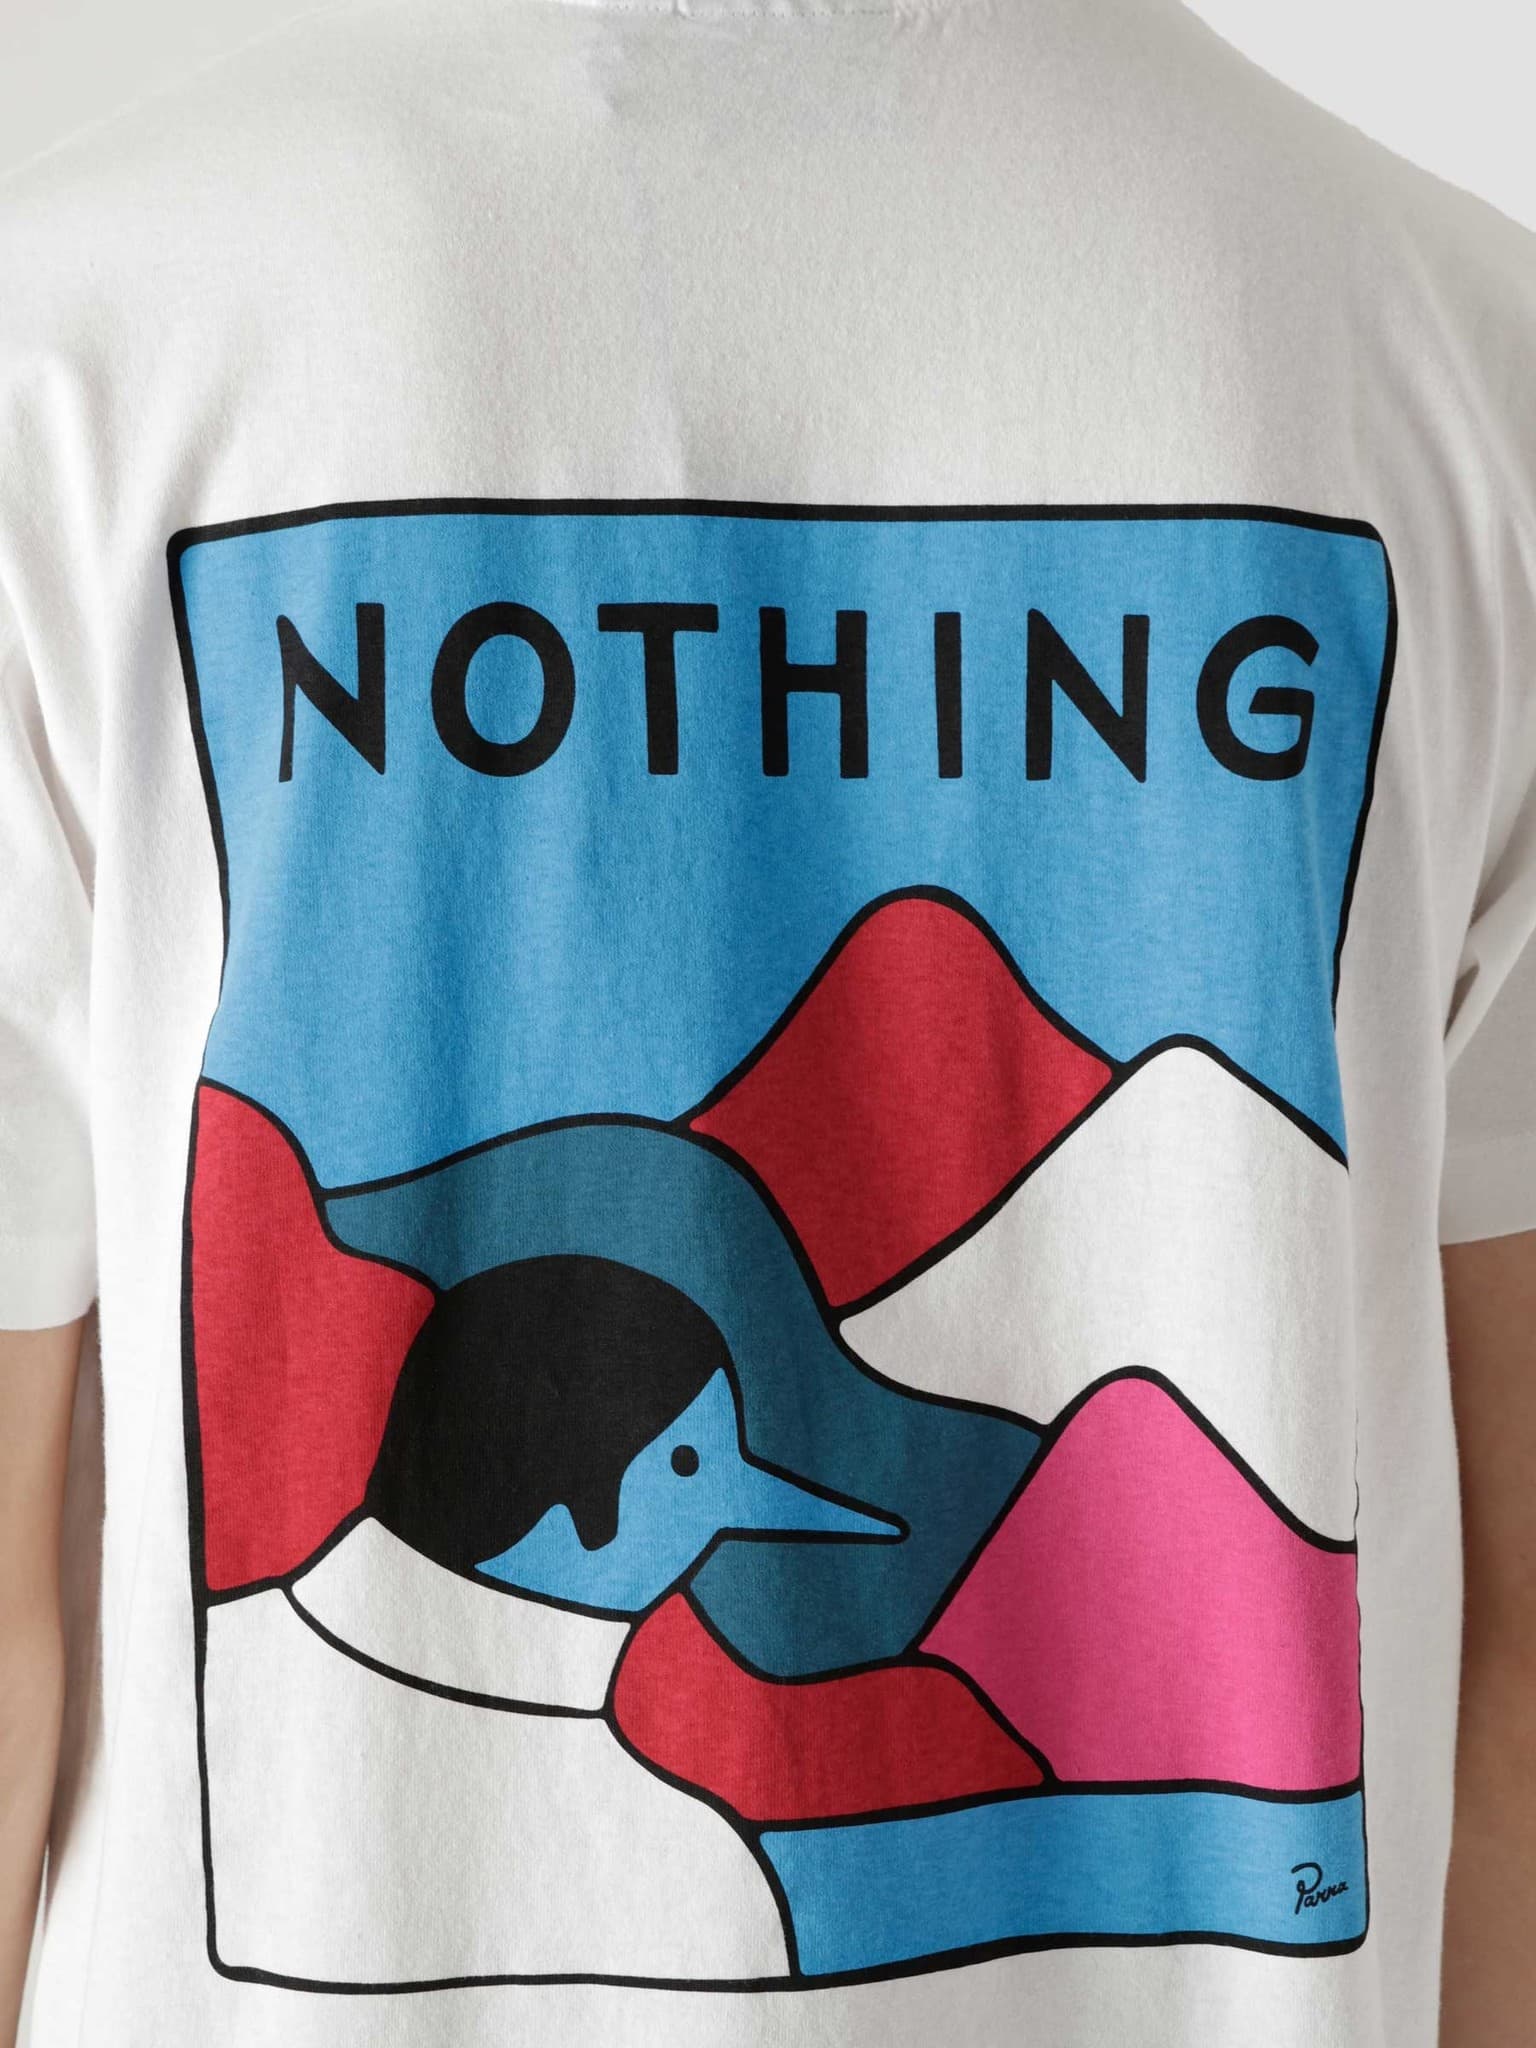 Nothing T-Shirt White 45460